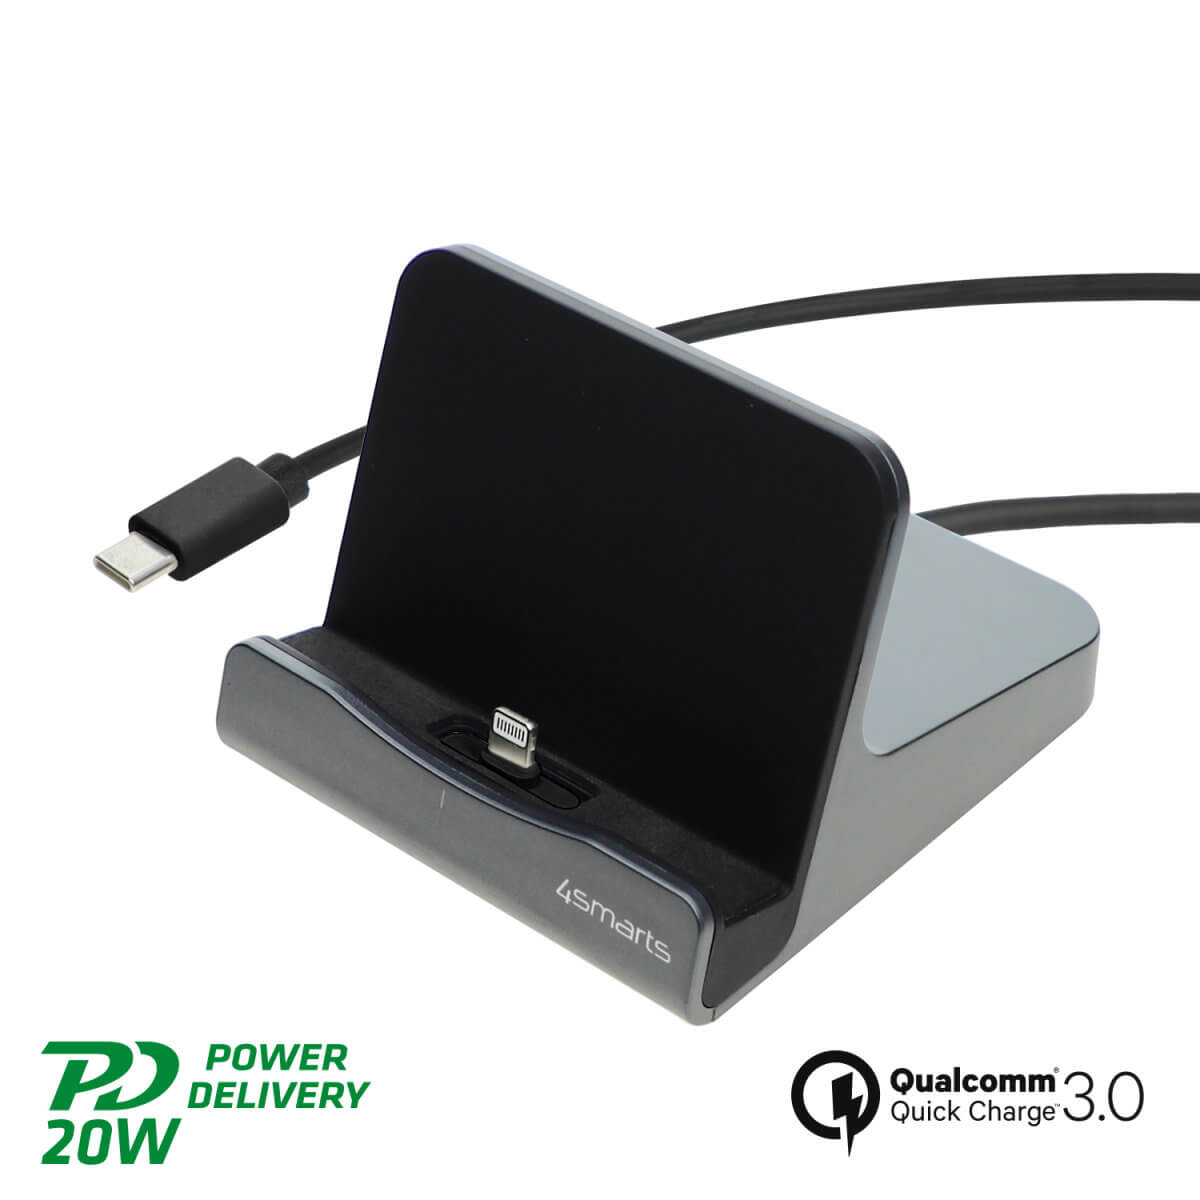 4smarts Charging Station VoltDock Tablet Lightning 20W - док станция за зареждане на Apple устройства с Lightning порт